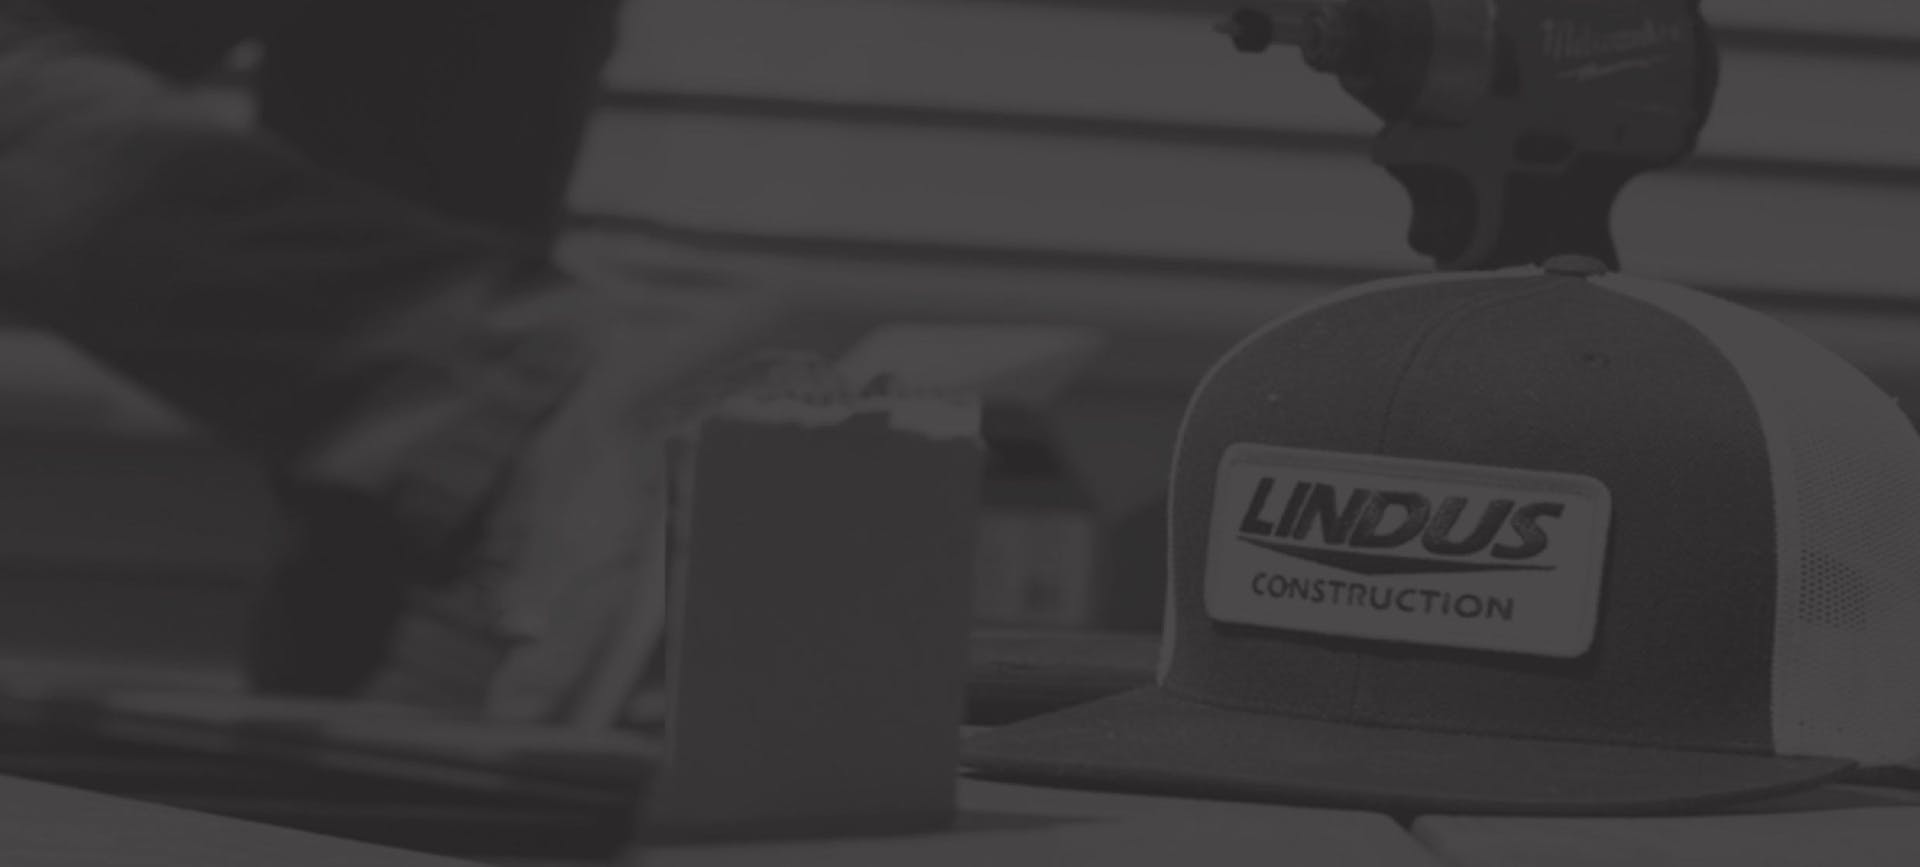 A Lindus construction trucker hat